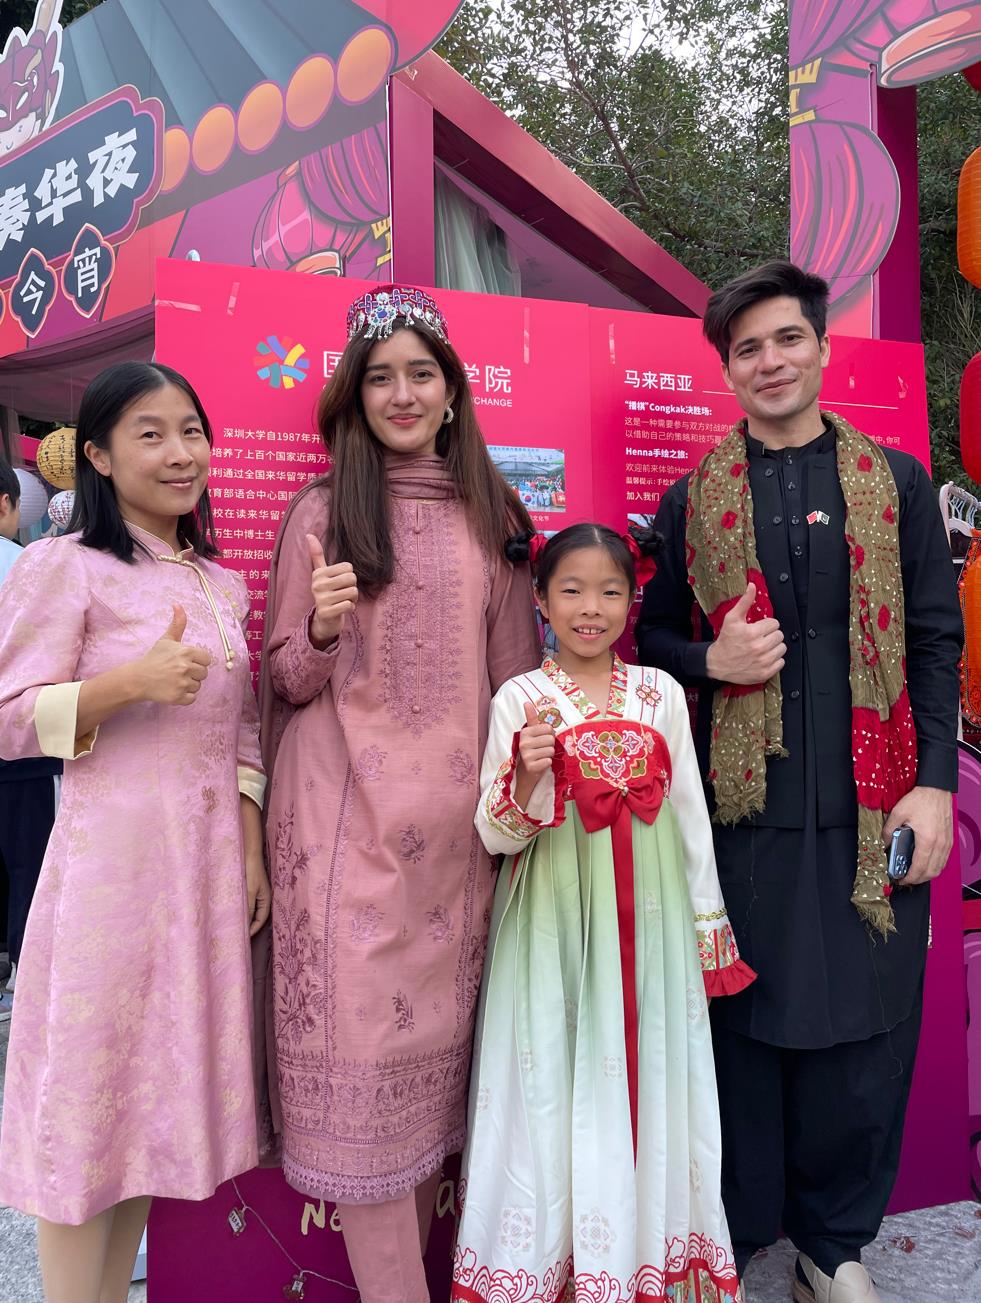 Pakistan’s culture & heritage attract visitors at Shenzhen University's Lantern Gala